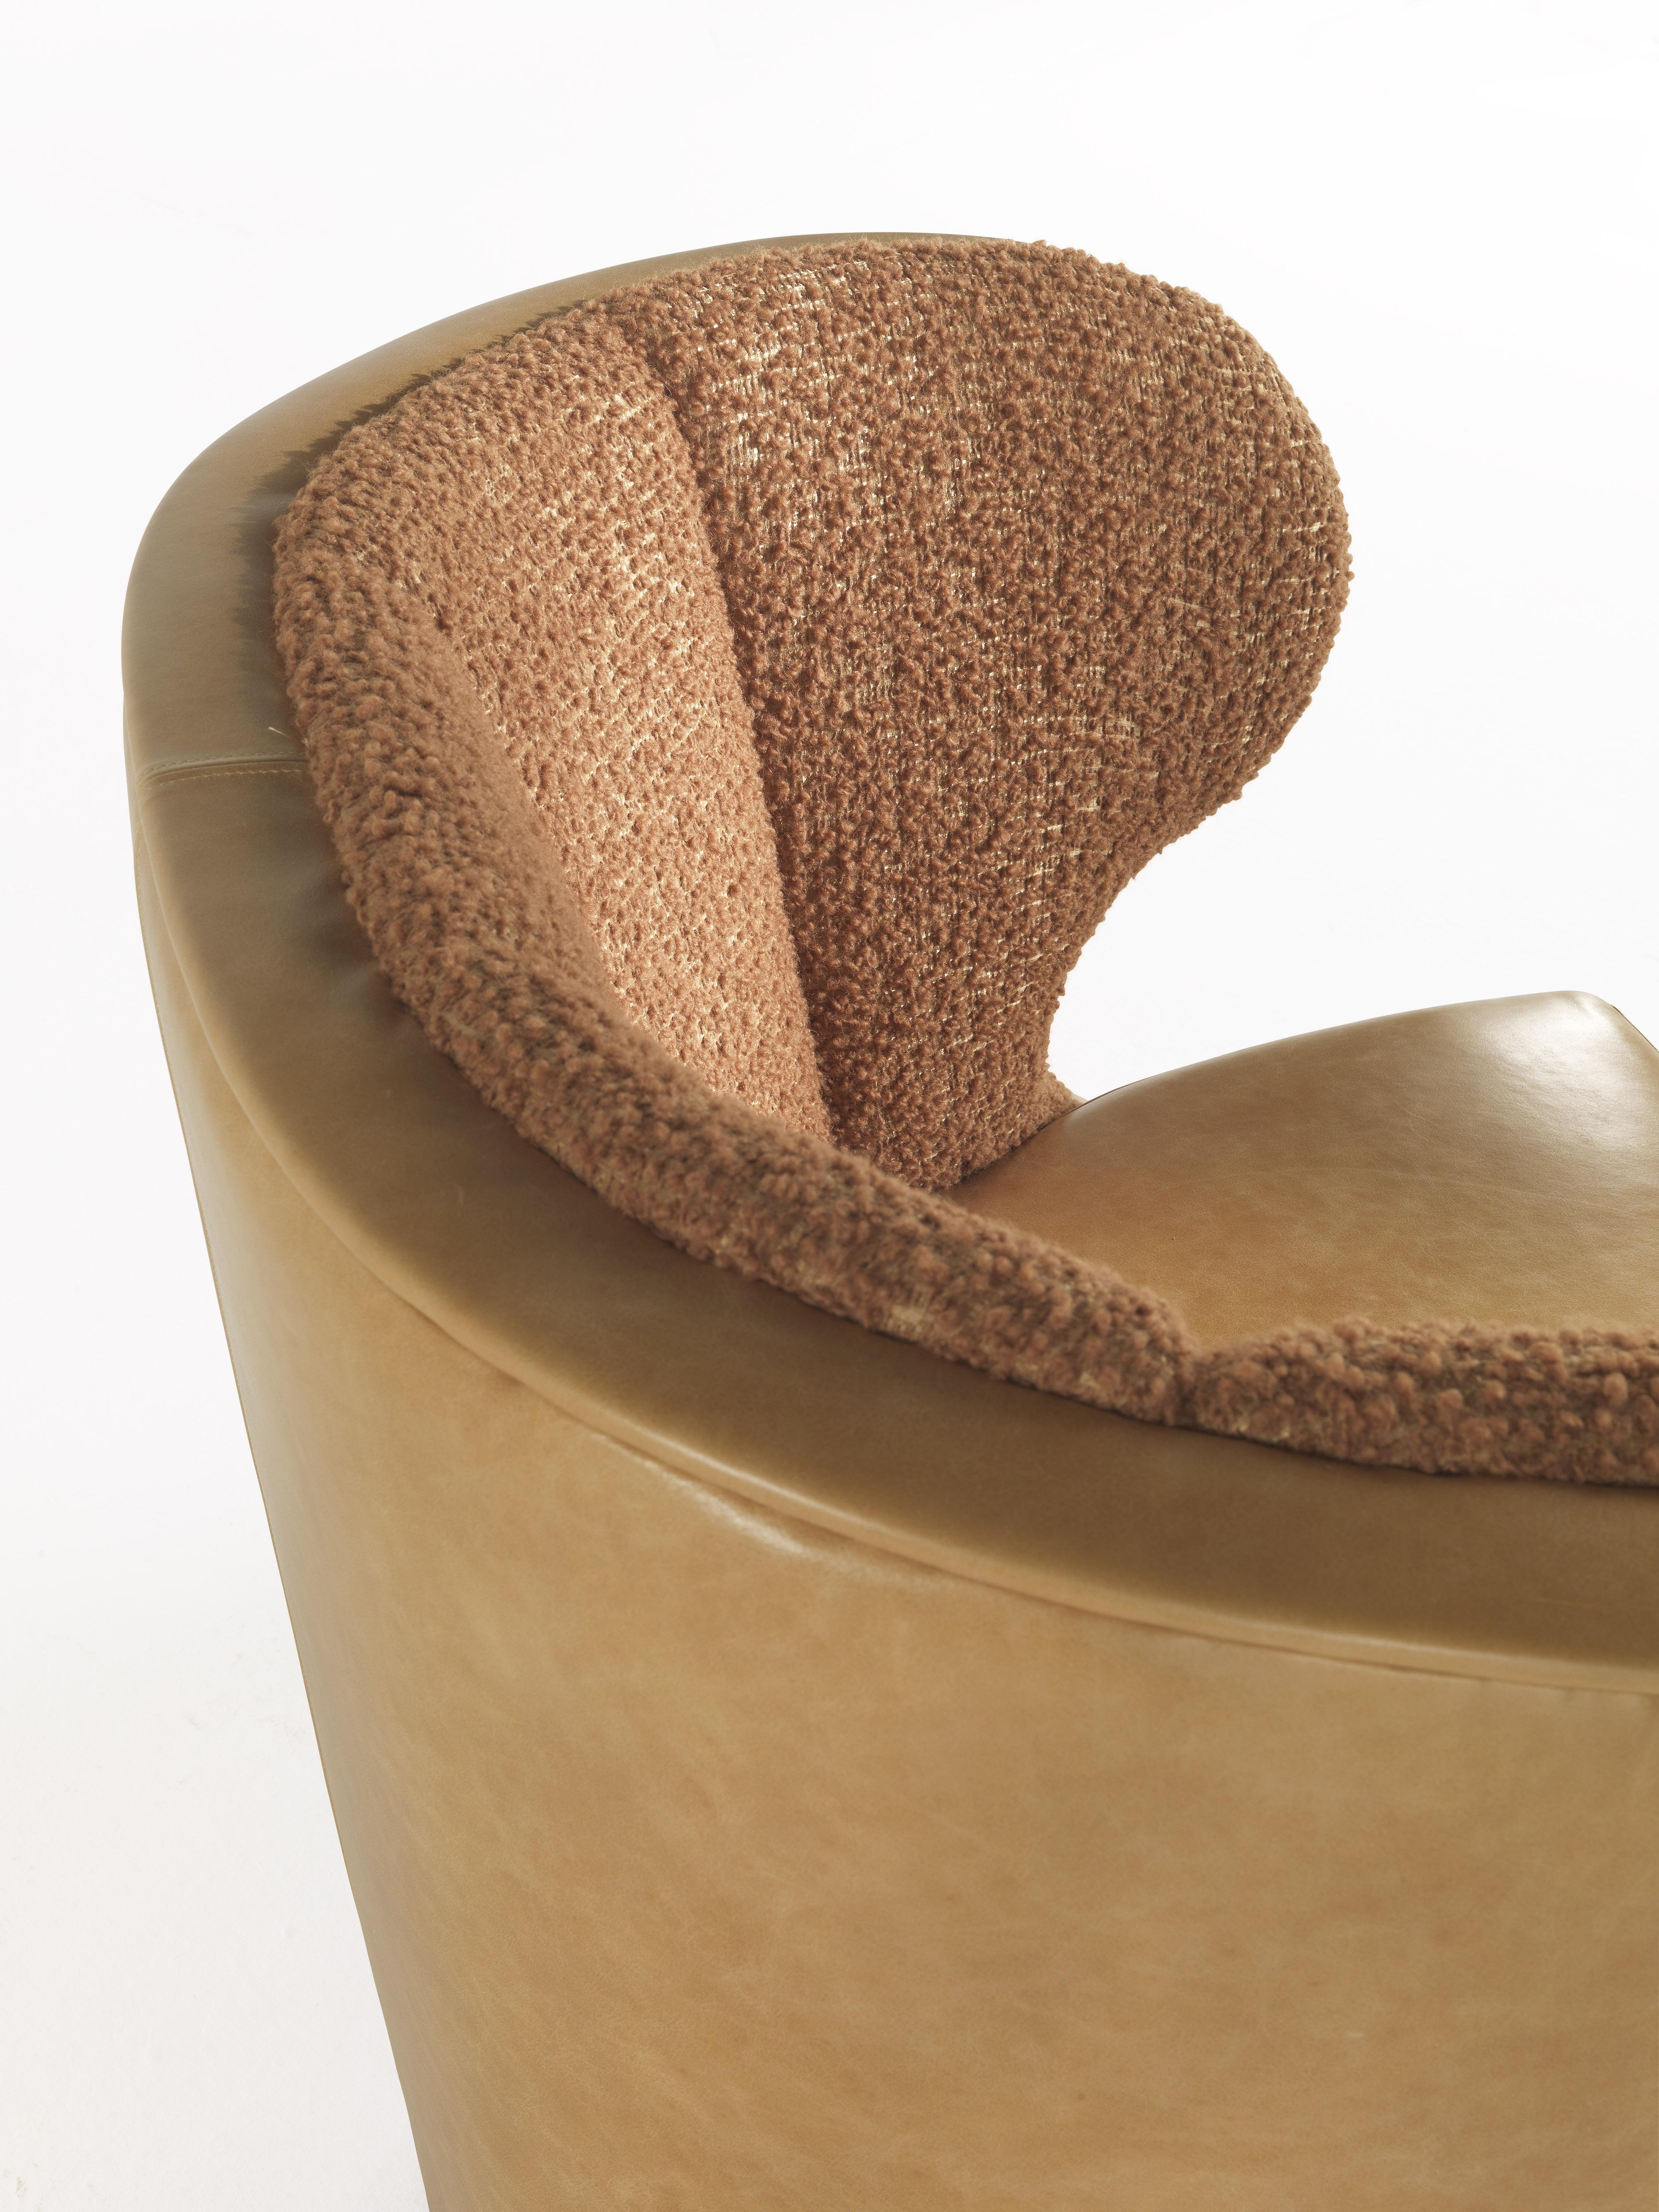 Italian Gianfranco Ferré Home Dunlop Armchair in Bronze Boucle Wool fabric For Sale